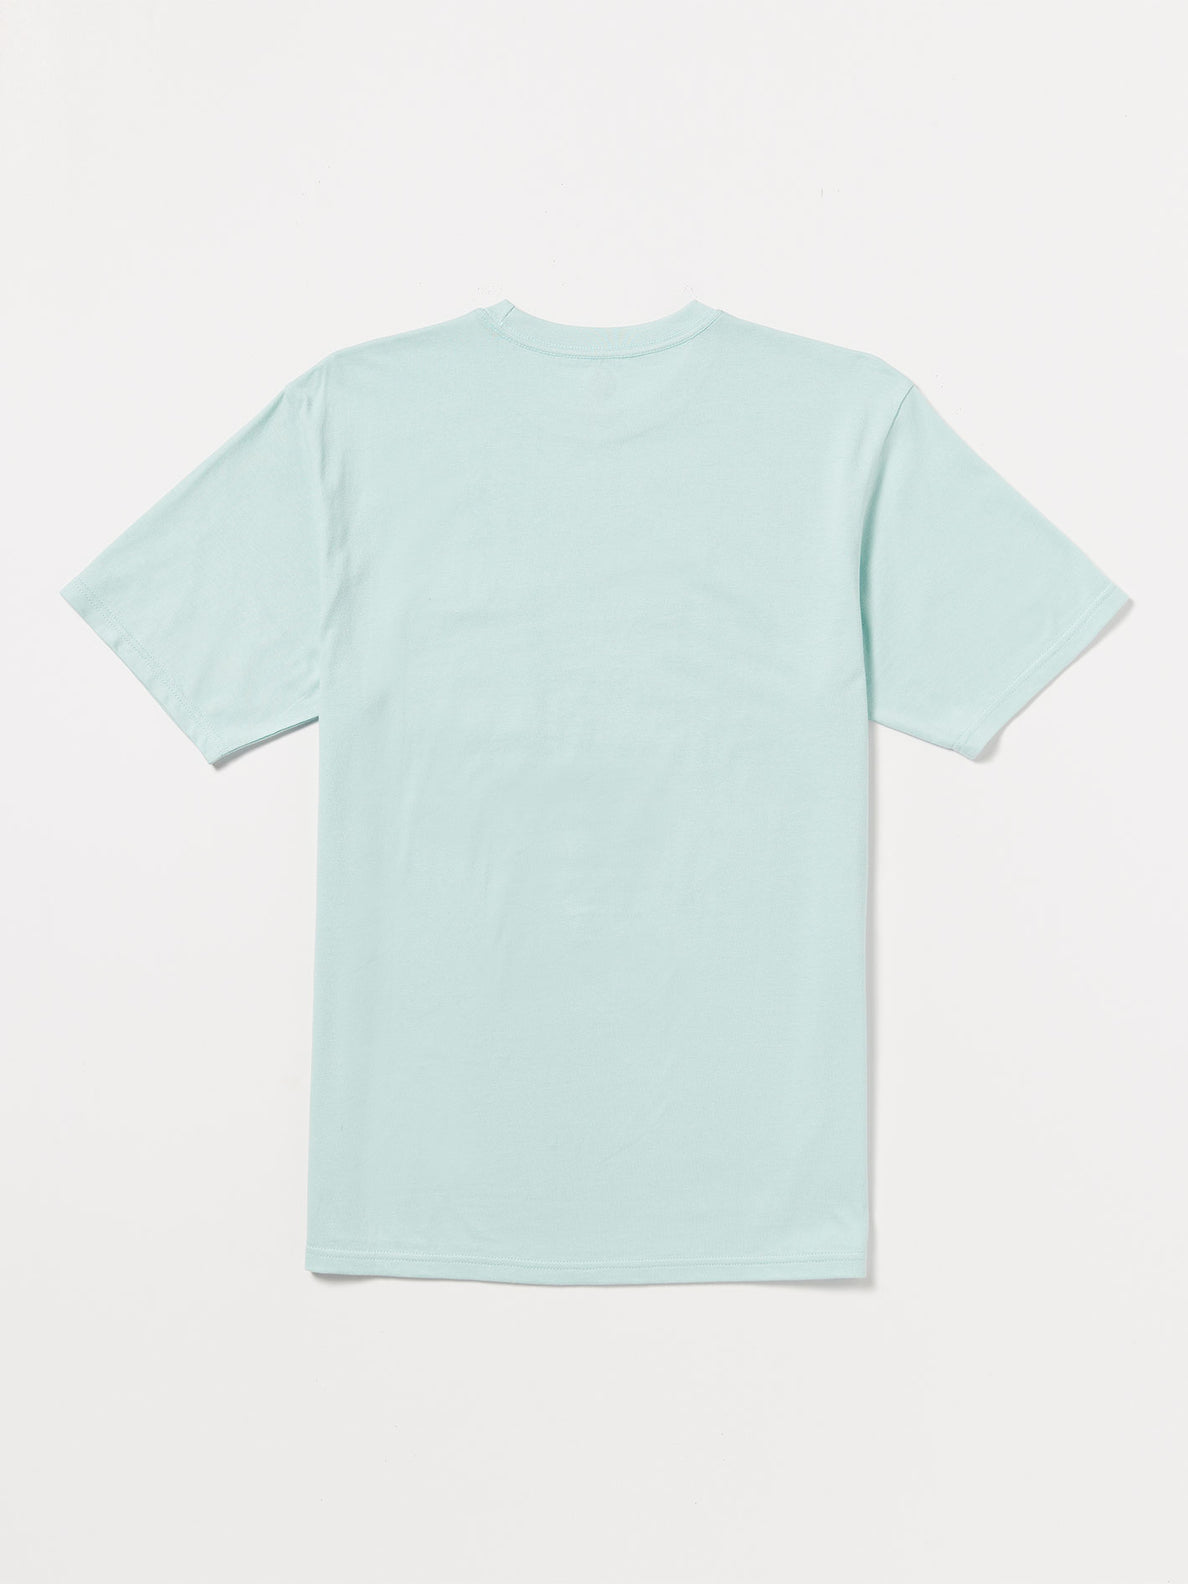 Lolani Crew Short Sleeve Shirt - Chlorine